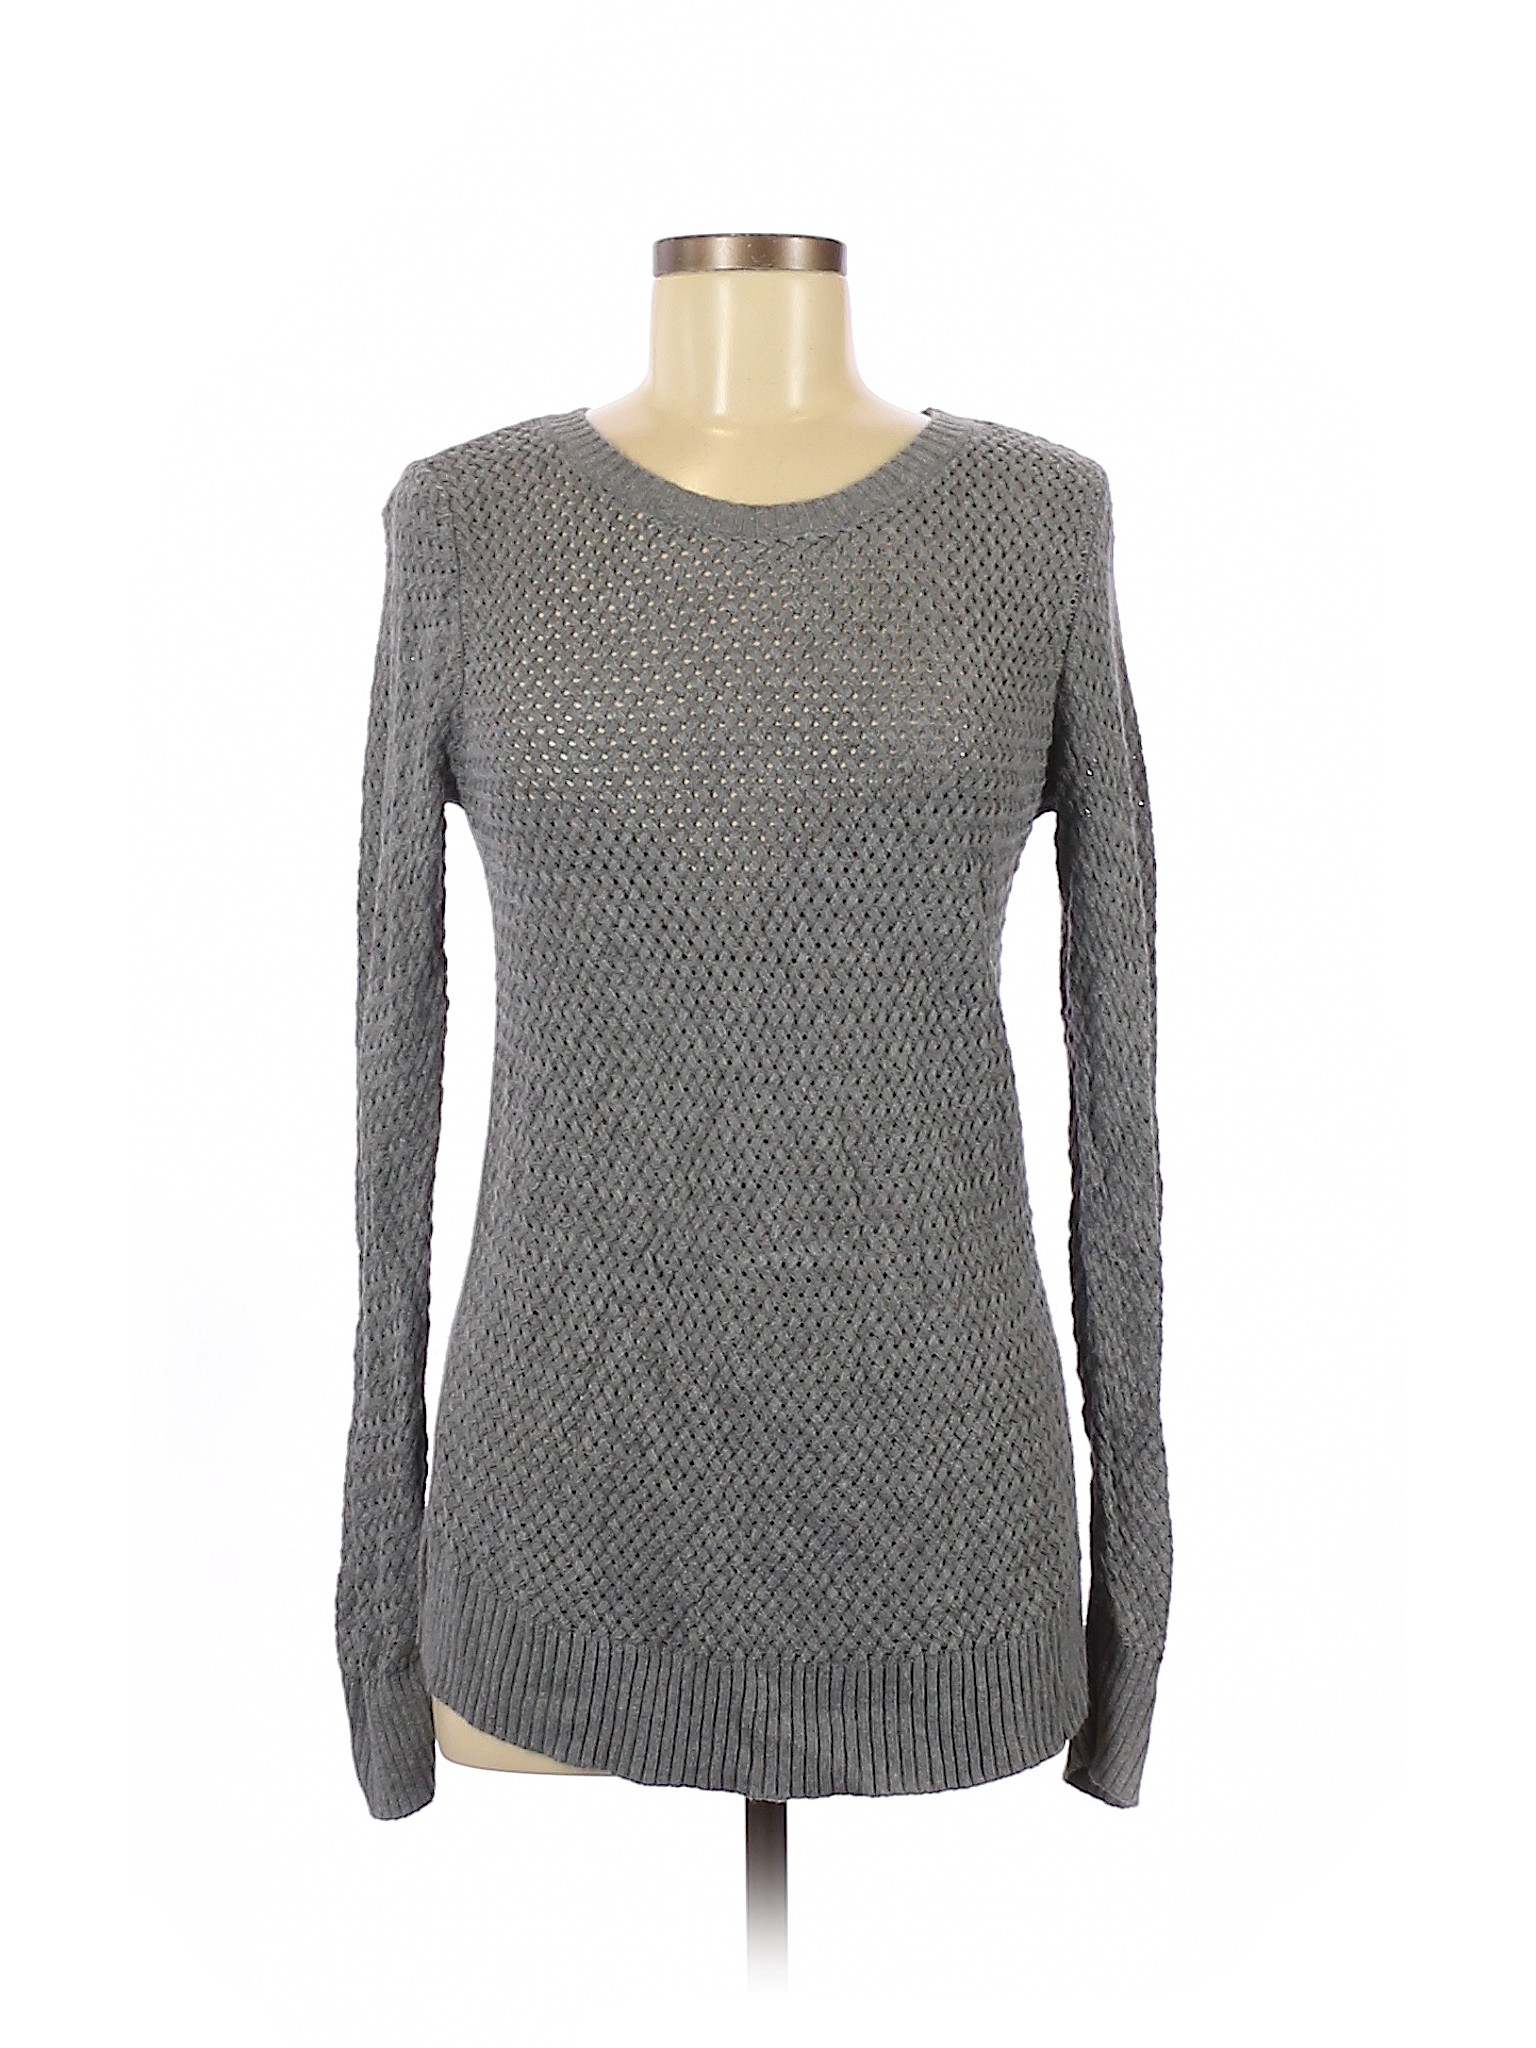 Ann Taylor LOFT Outlet Women Gray Pullover Sweater M | eBay